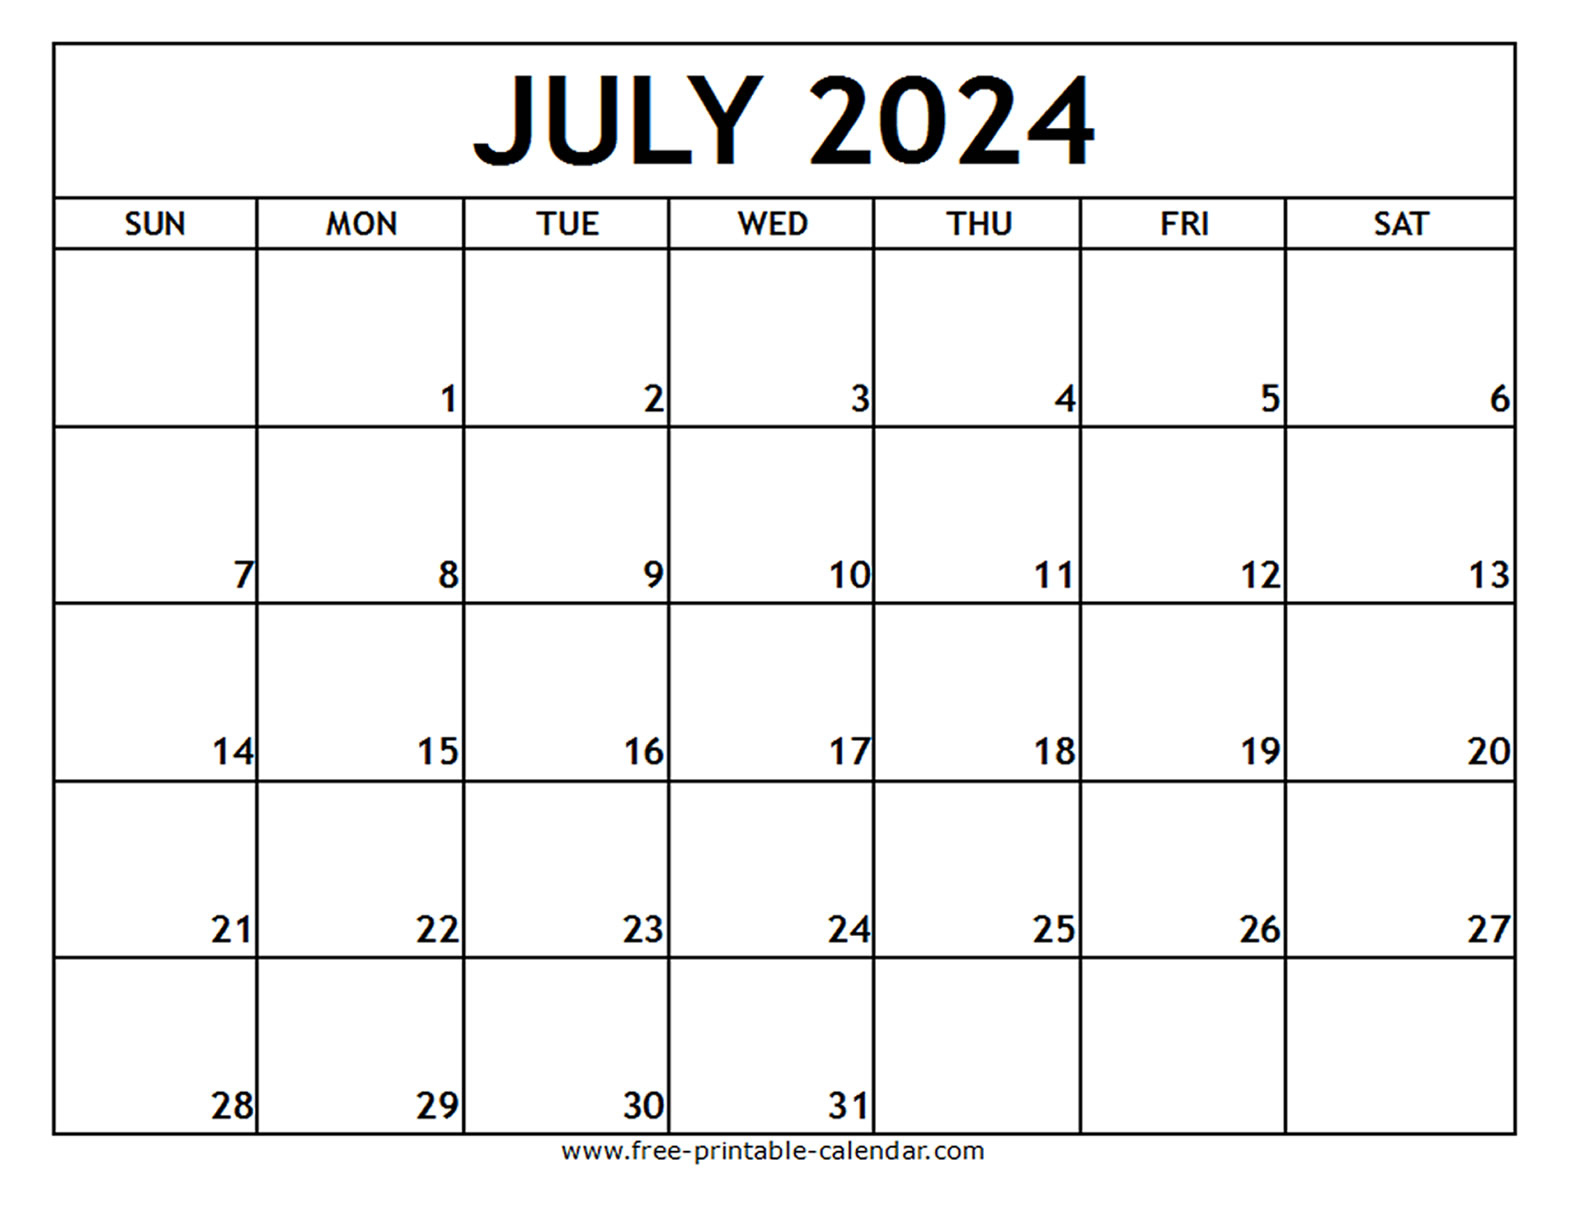 July 2024 Printable Calendar - Free-Printable-Calendar | Free Printable Weekly Calendar July 2024